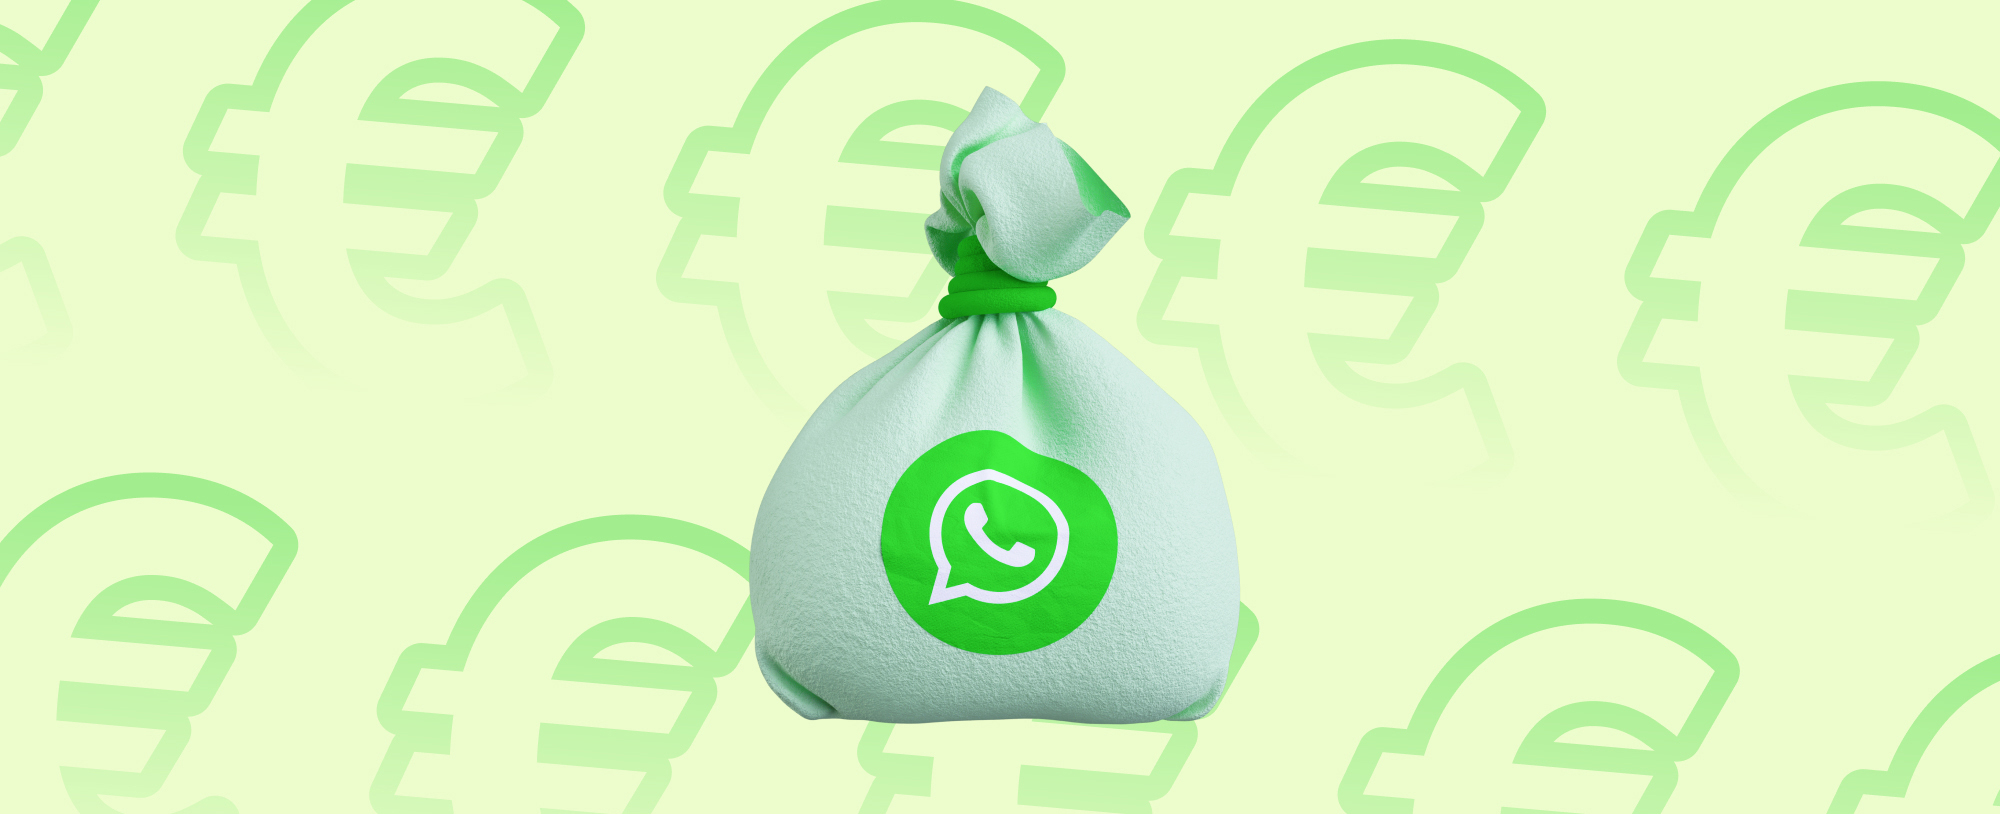 charles blog post header main, money bag with WhatsApp logo